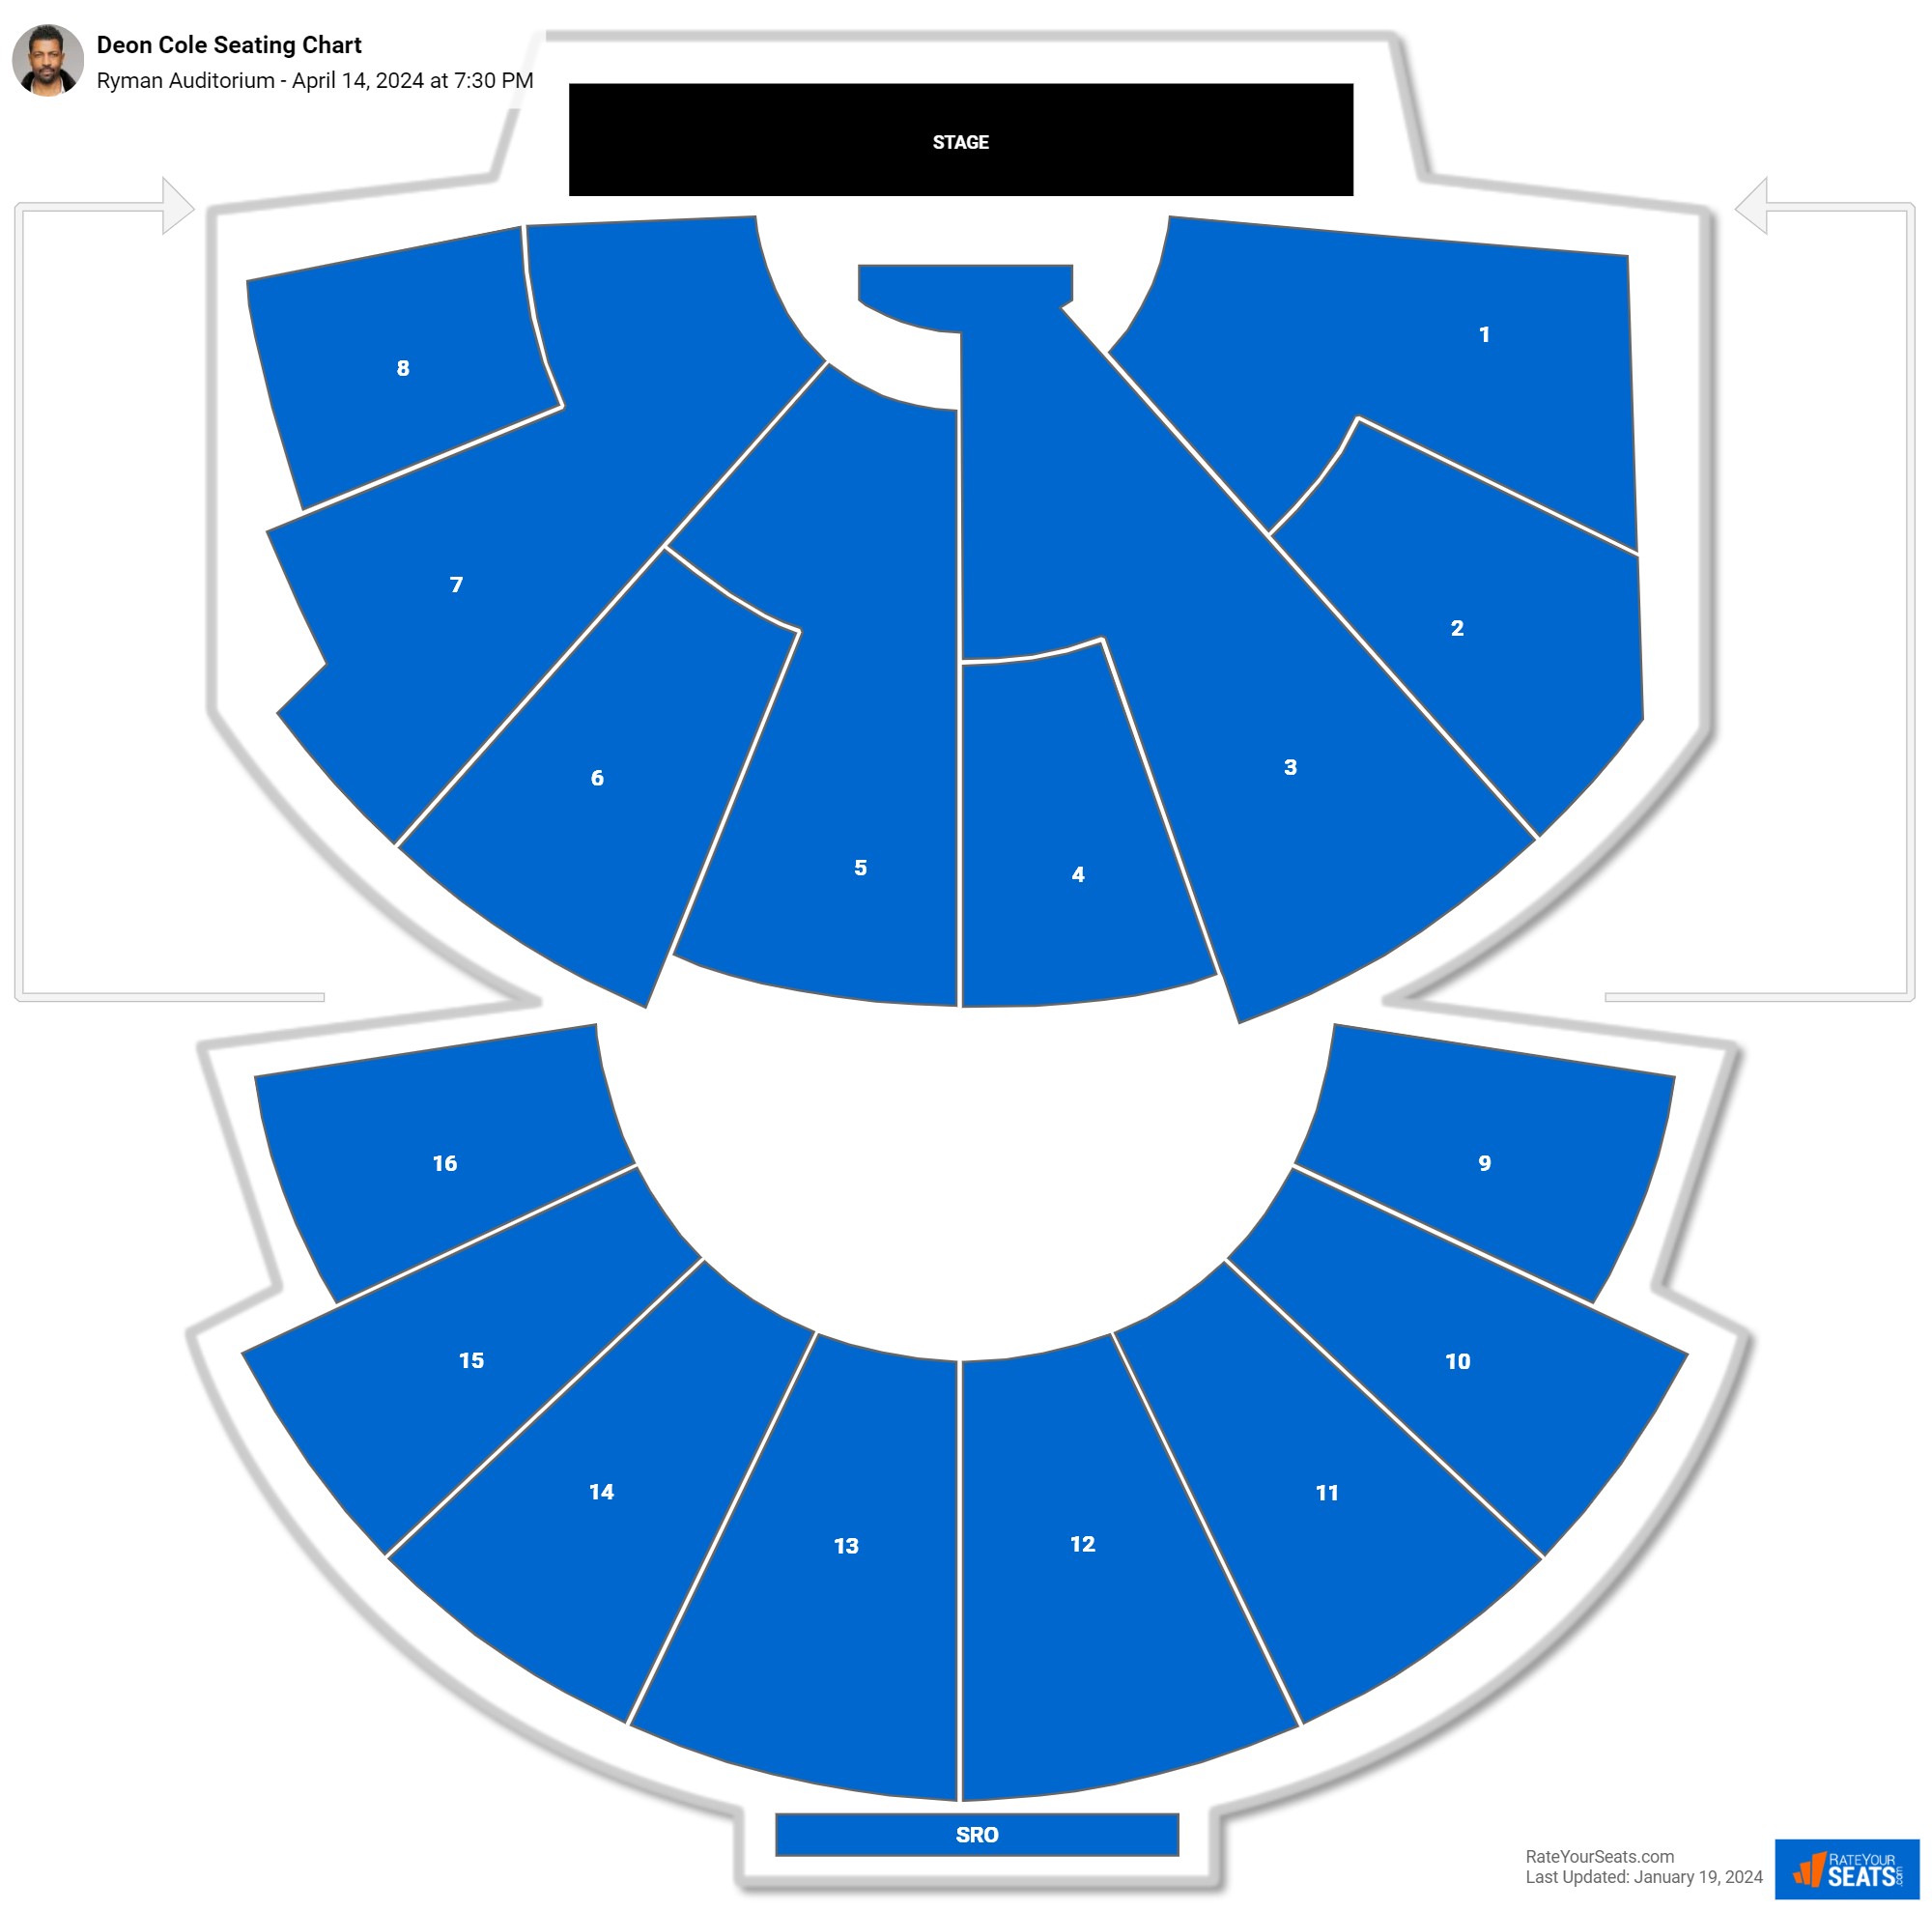 Deon Cole seating chart Ryman Auditorium